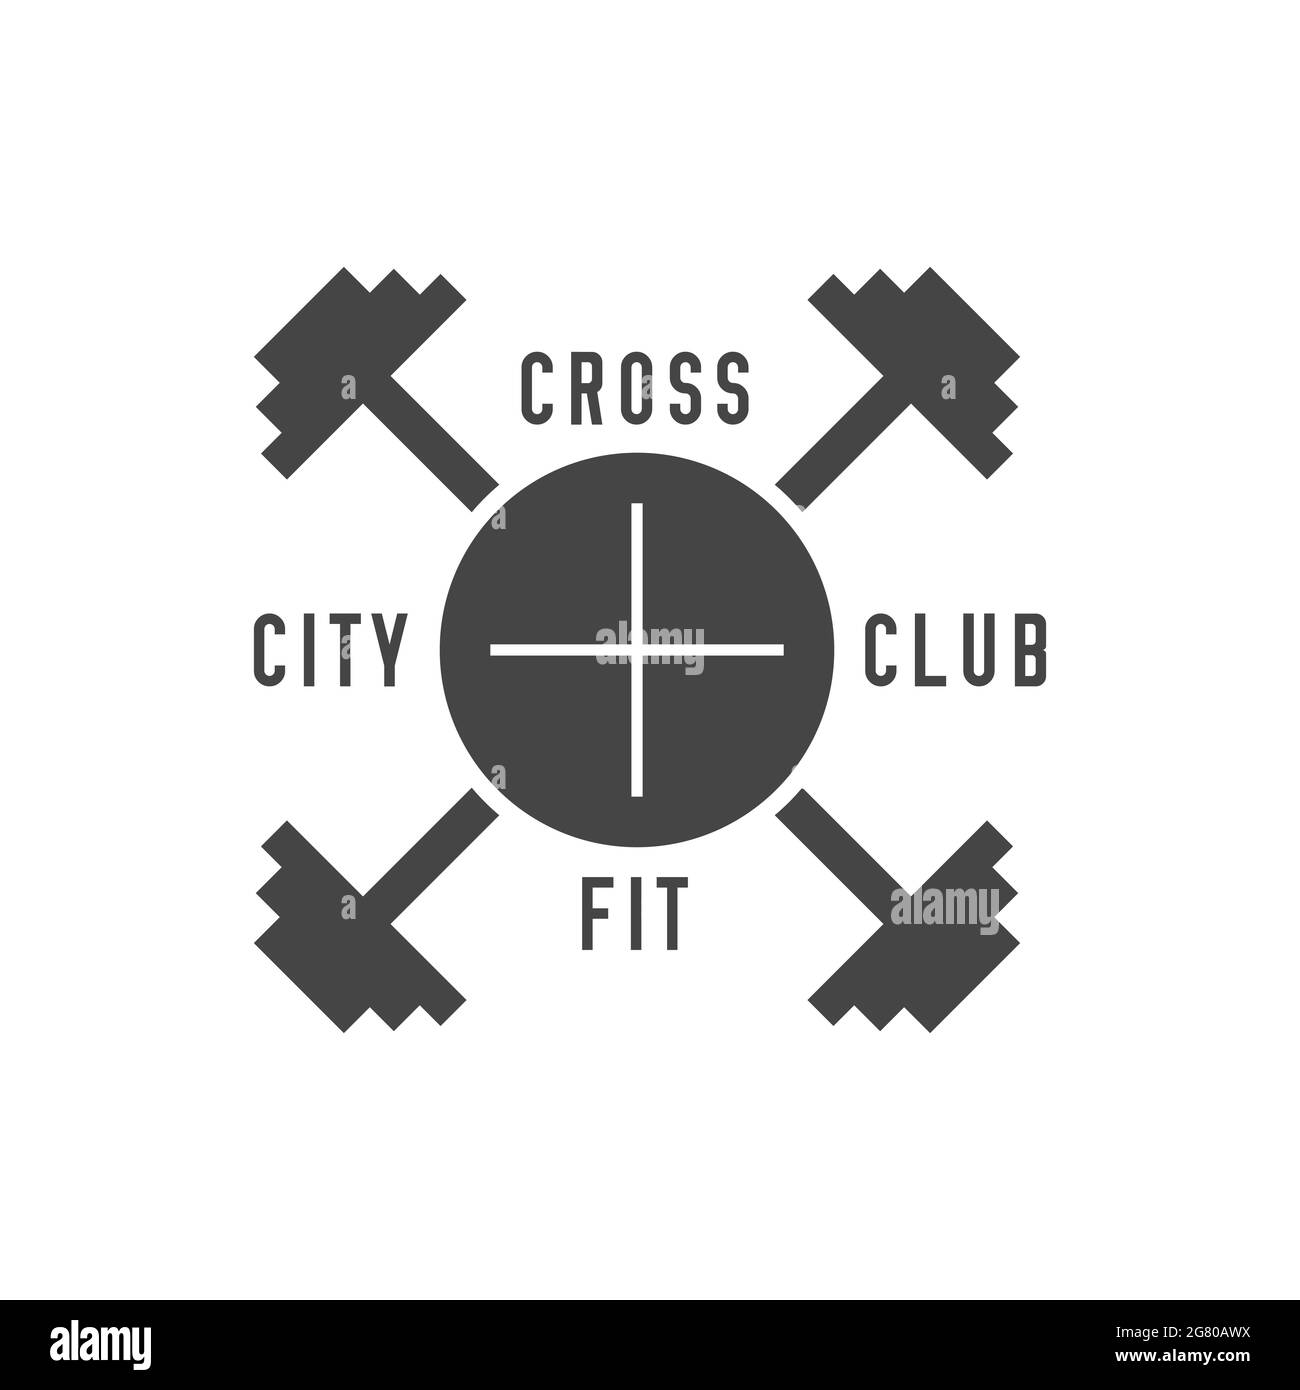 Cross fit city club. Gym bodybuilding, fitness center emblem. Crossed dumbbells. illustration. Stock Photo